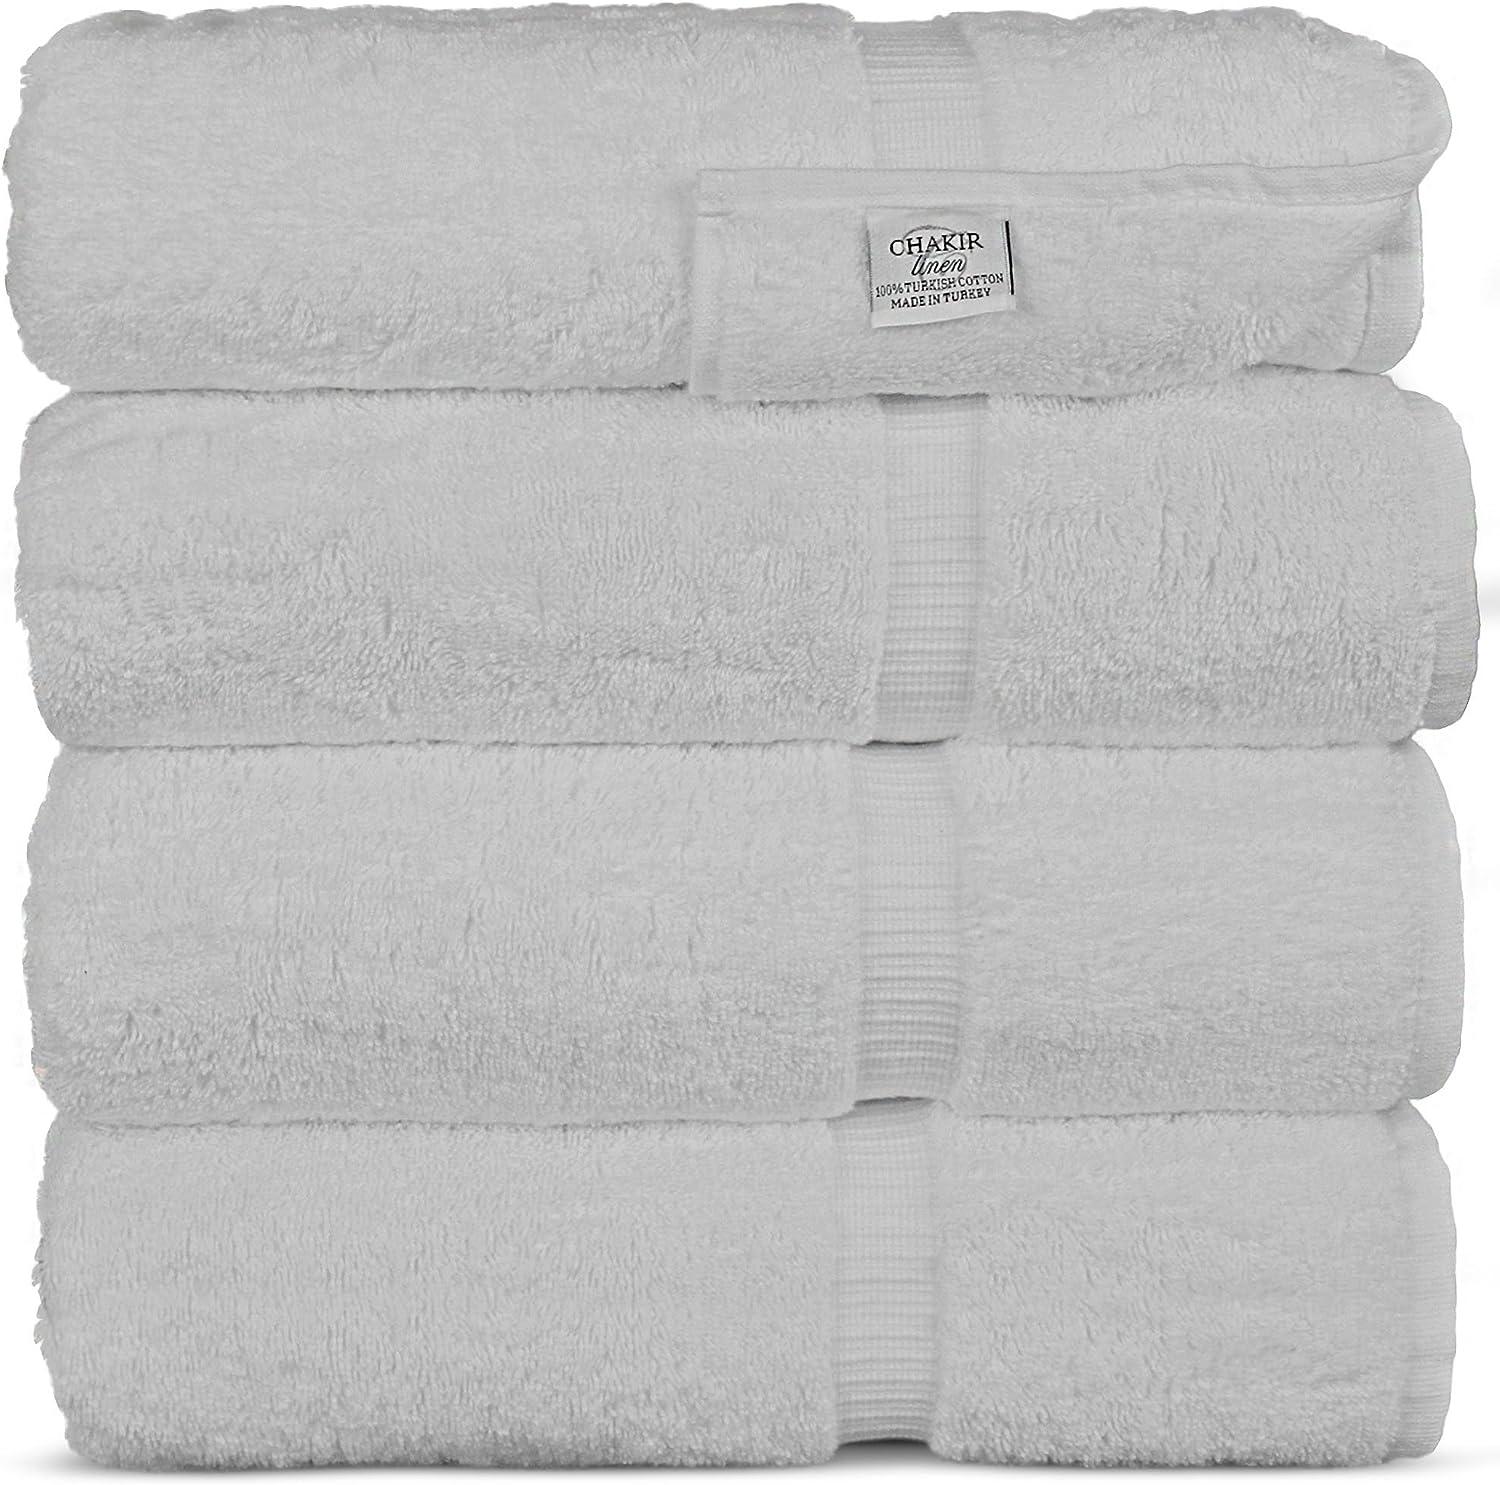 Chakir Turkish Linens 100% Cotton Premium Turkish Towels for Bathroom | 2  Bath Towels - 2 Hand Towels, 2 Washcloths (6-Piece Towel Set, White)